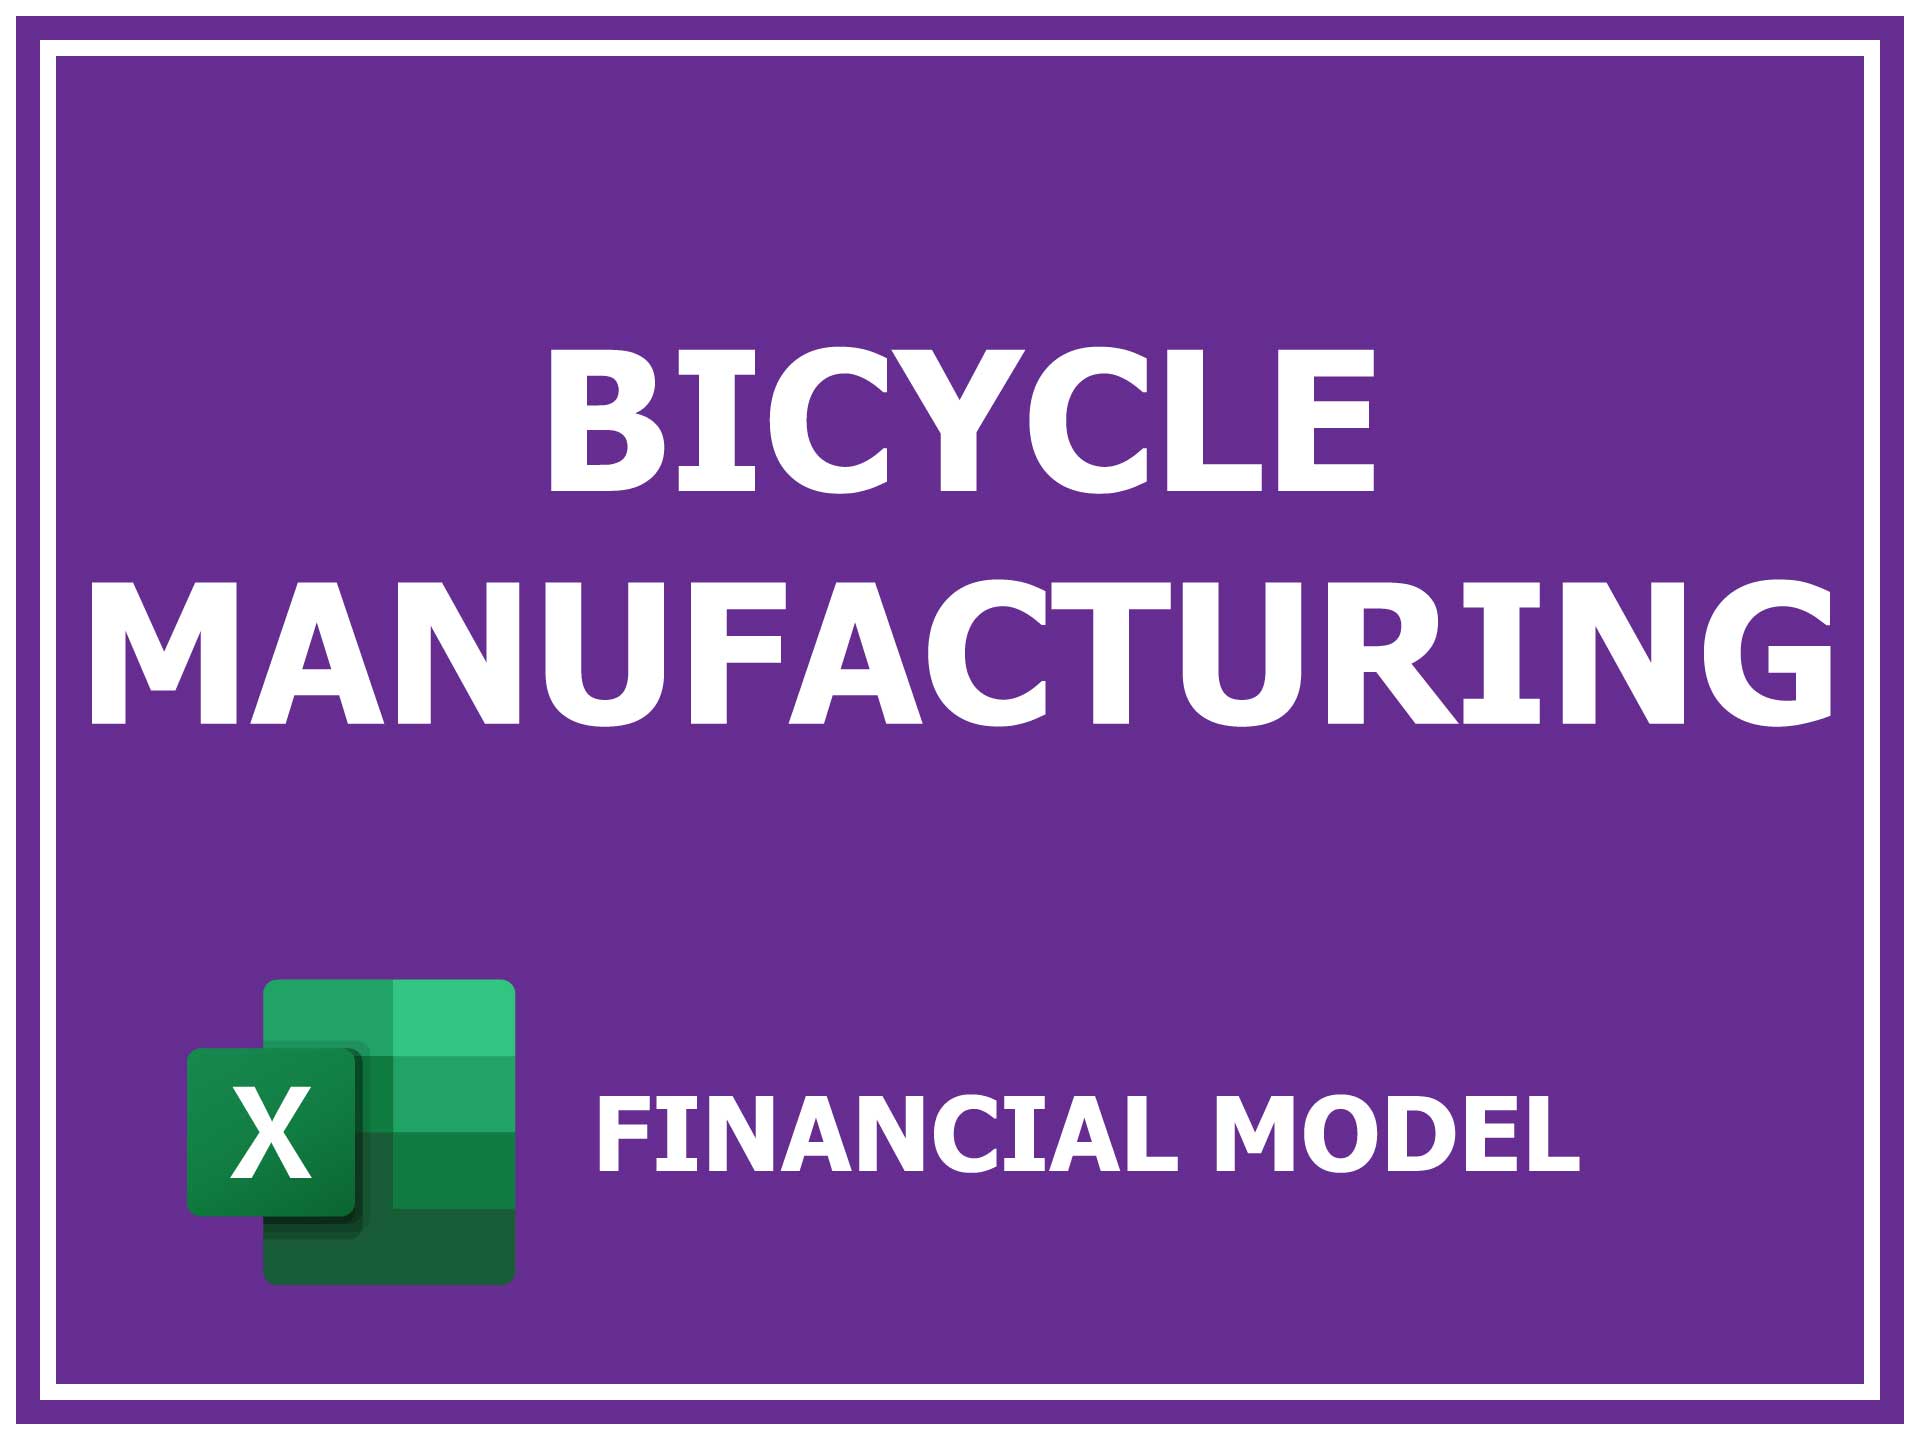 Bicycle Manufacturing